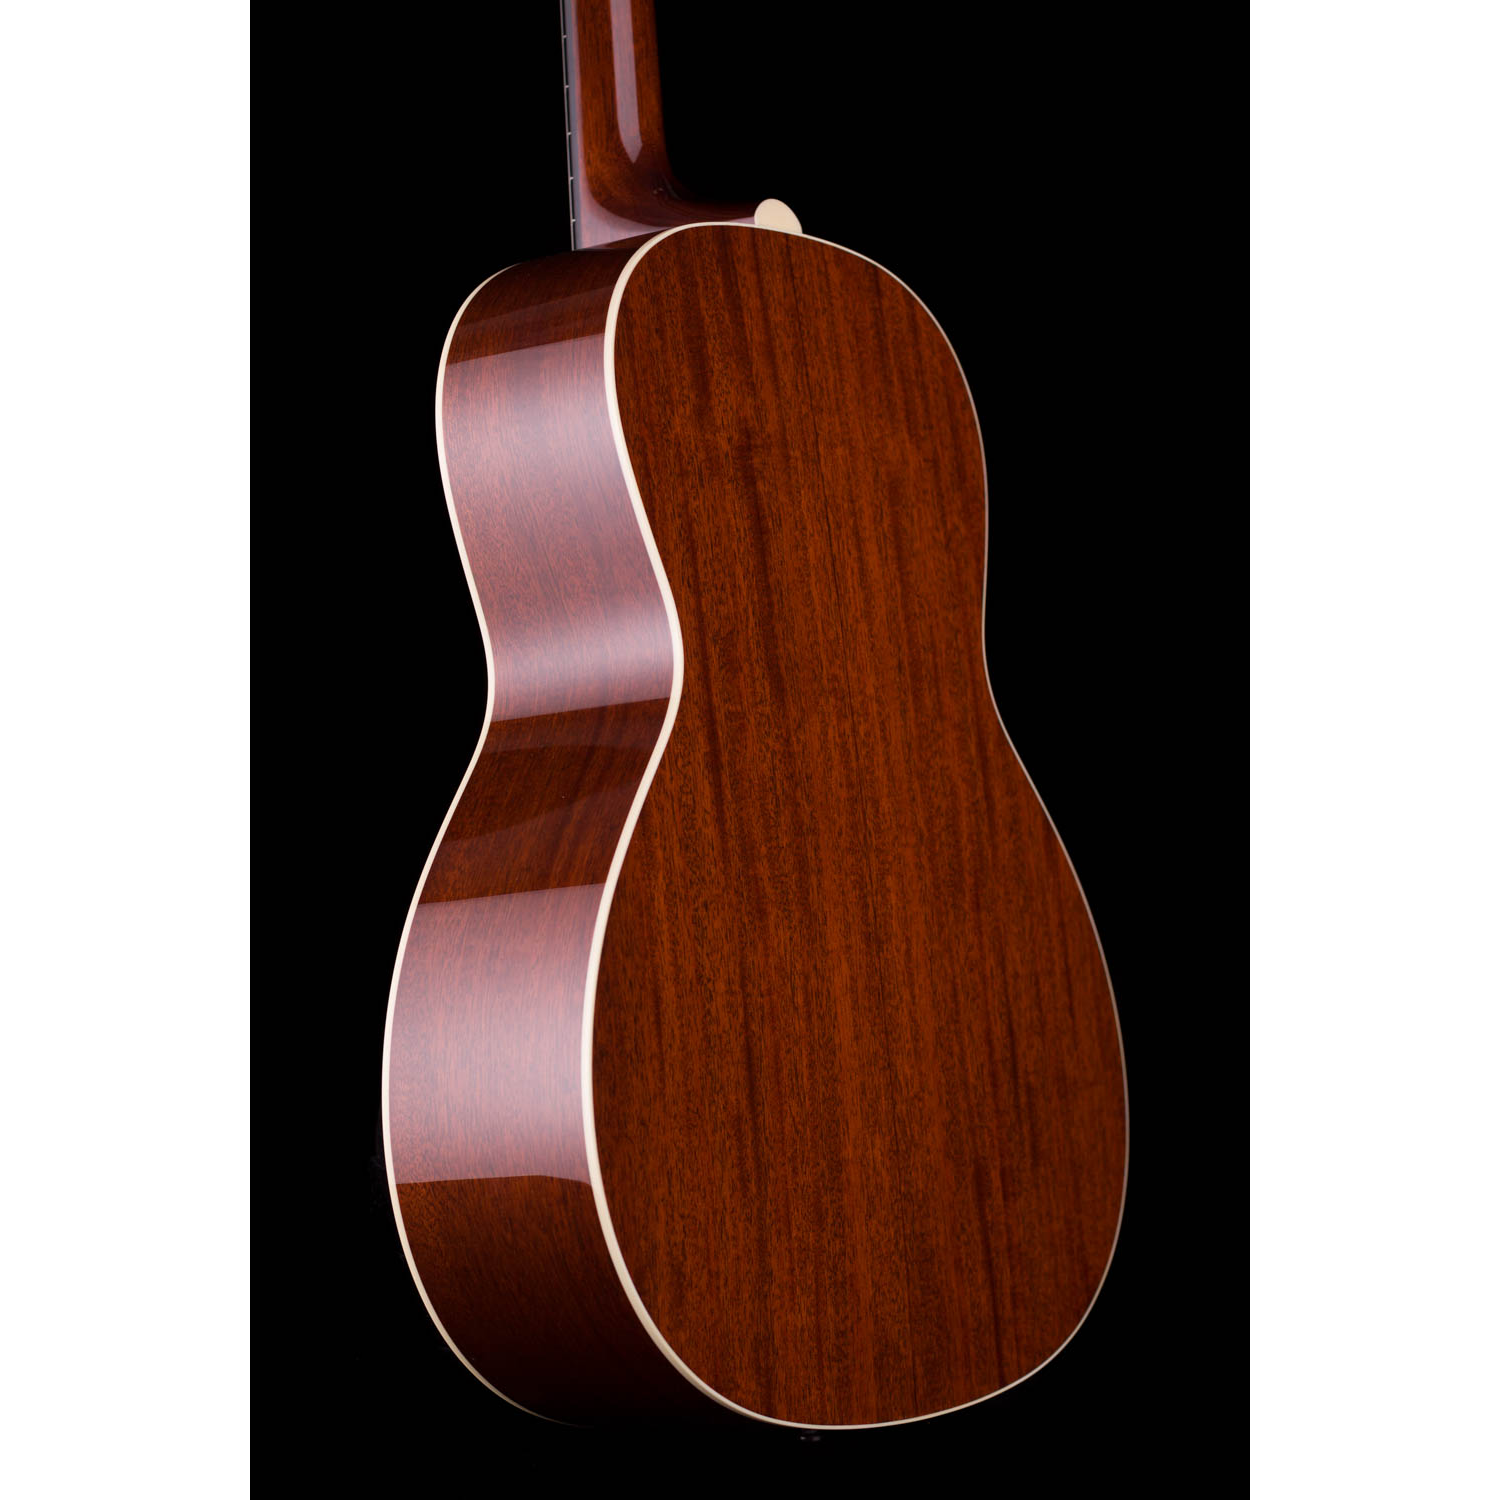 Collings C10 Natural Finish Acoustic Guitar